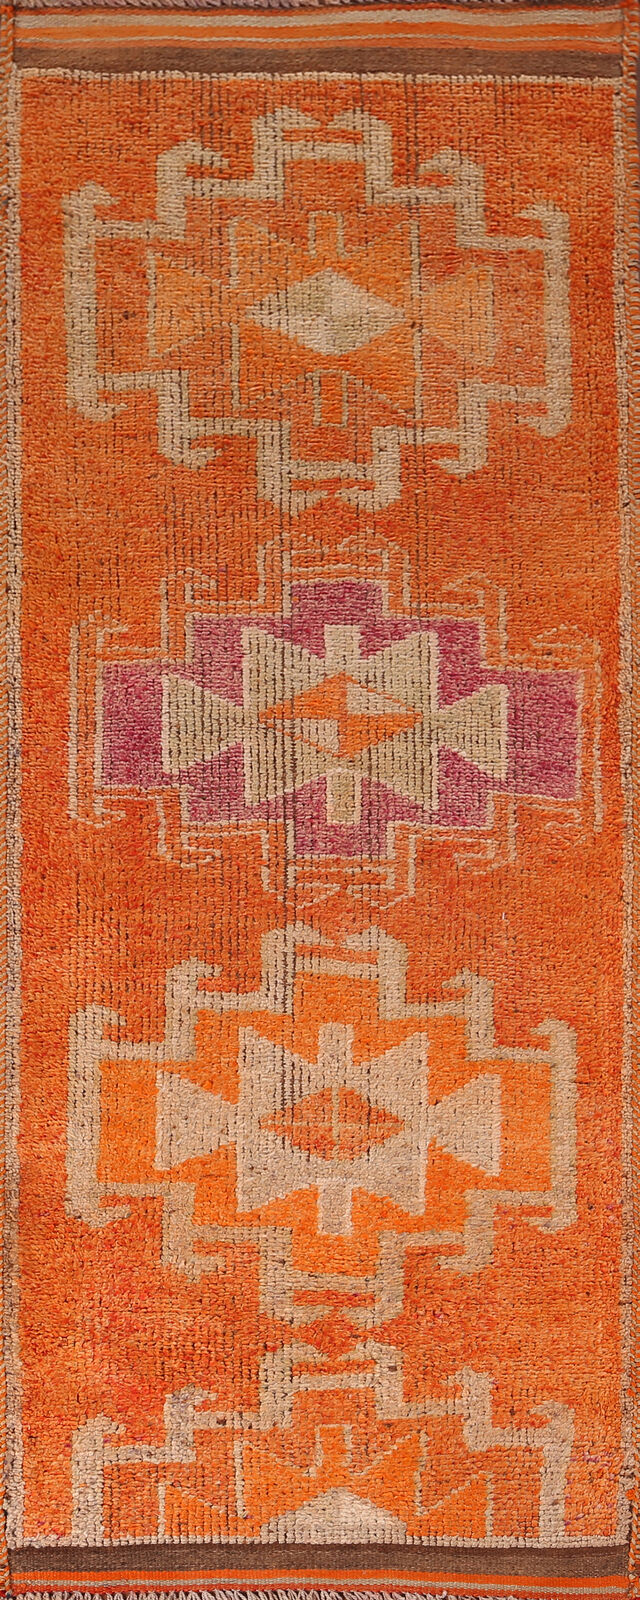 Orange Wool Oushak Oriental Runner Rug 4x10 Turkish Handmade Wool for Hallway